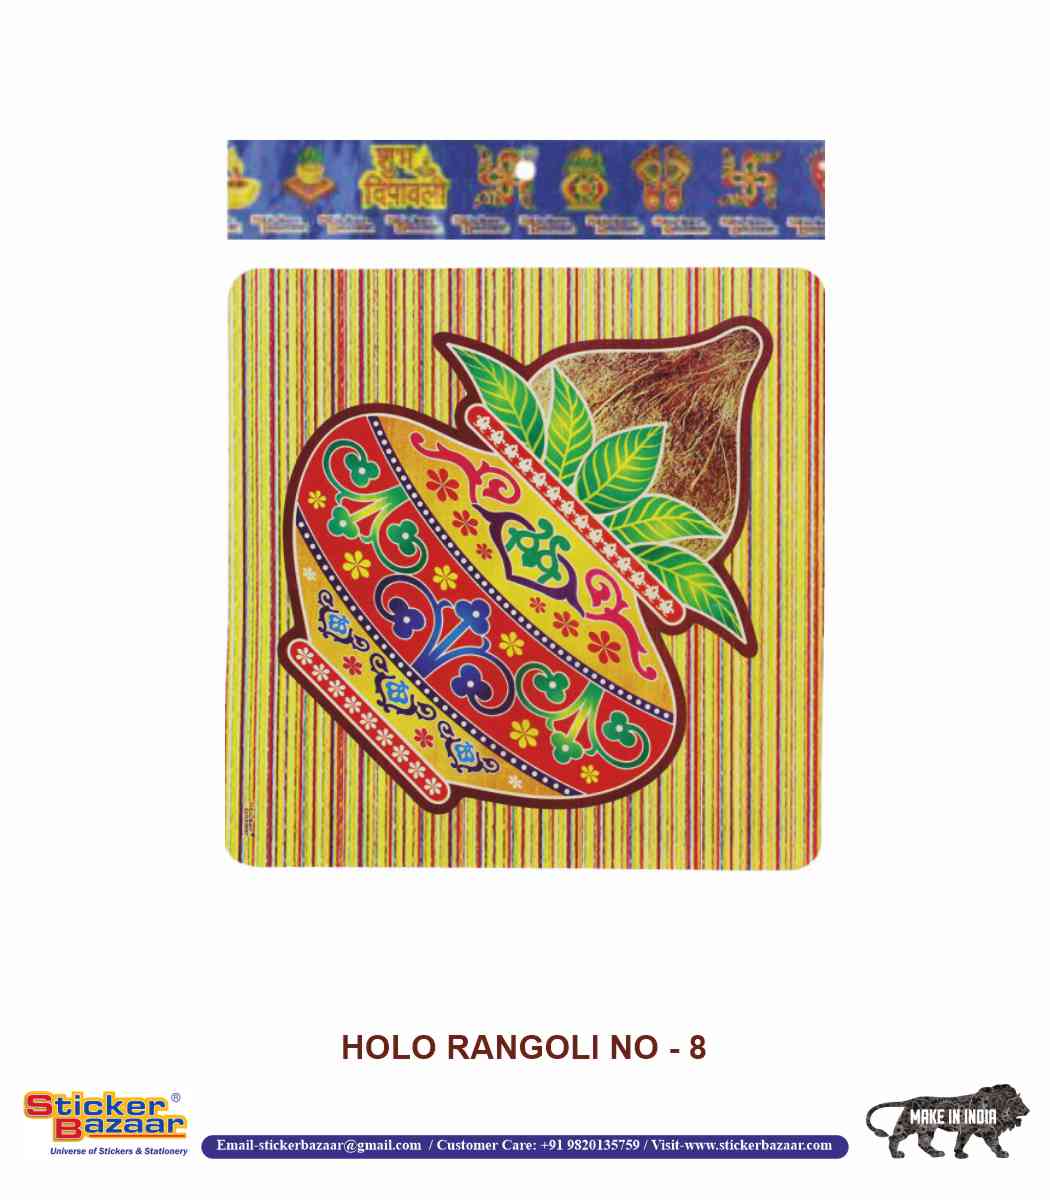 Sticker Bazaar Holo Rangoli HR8 with Header